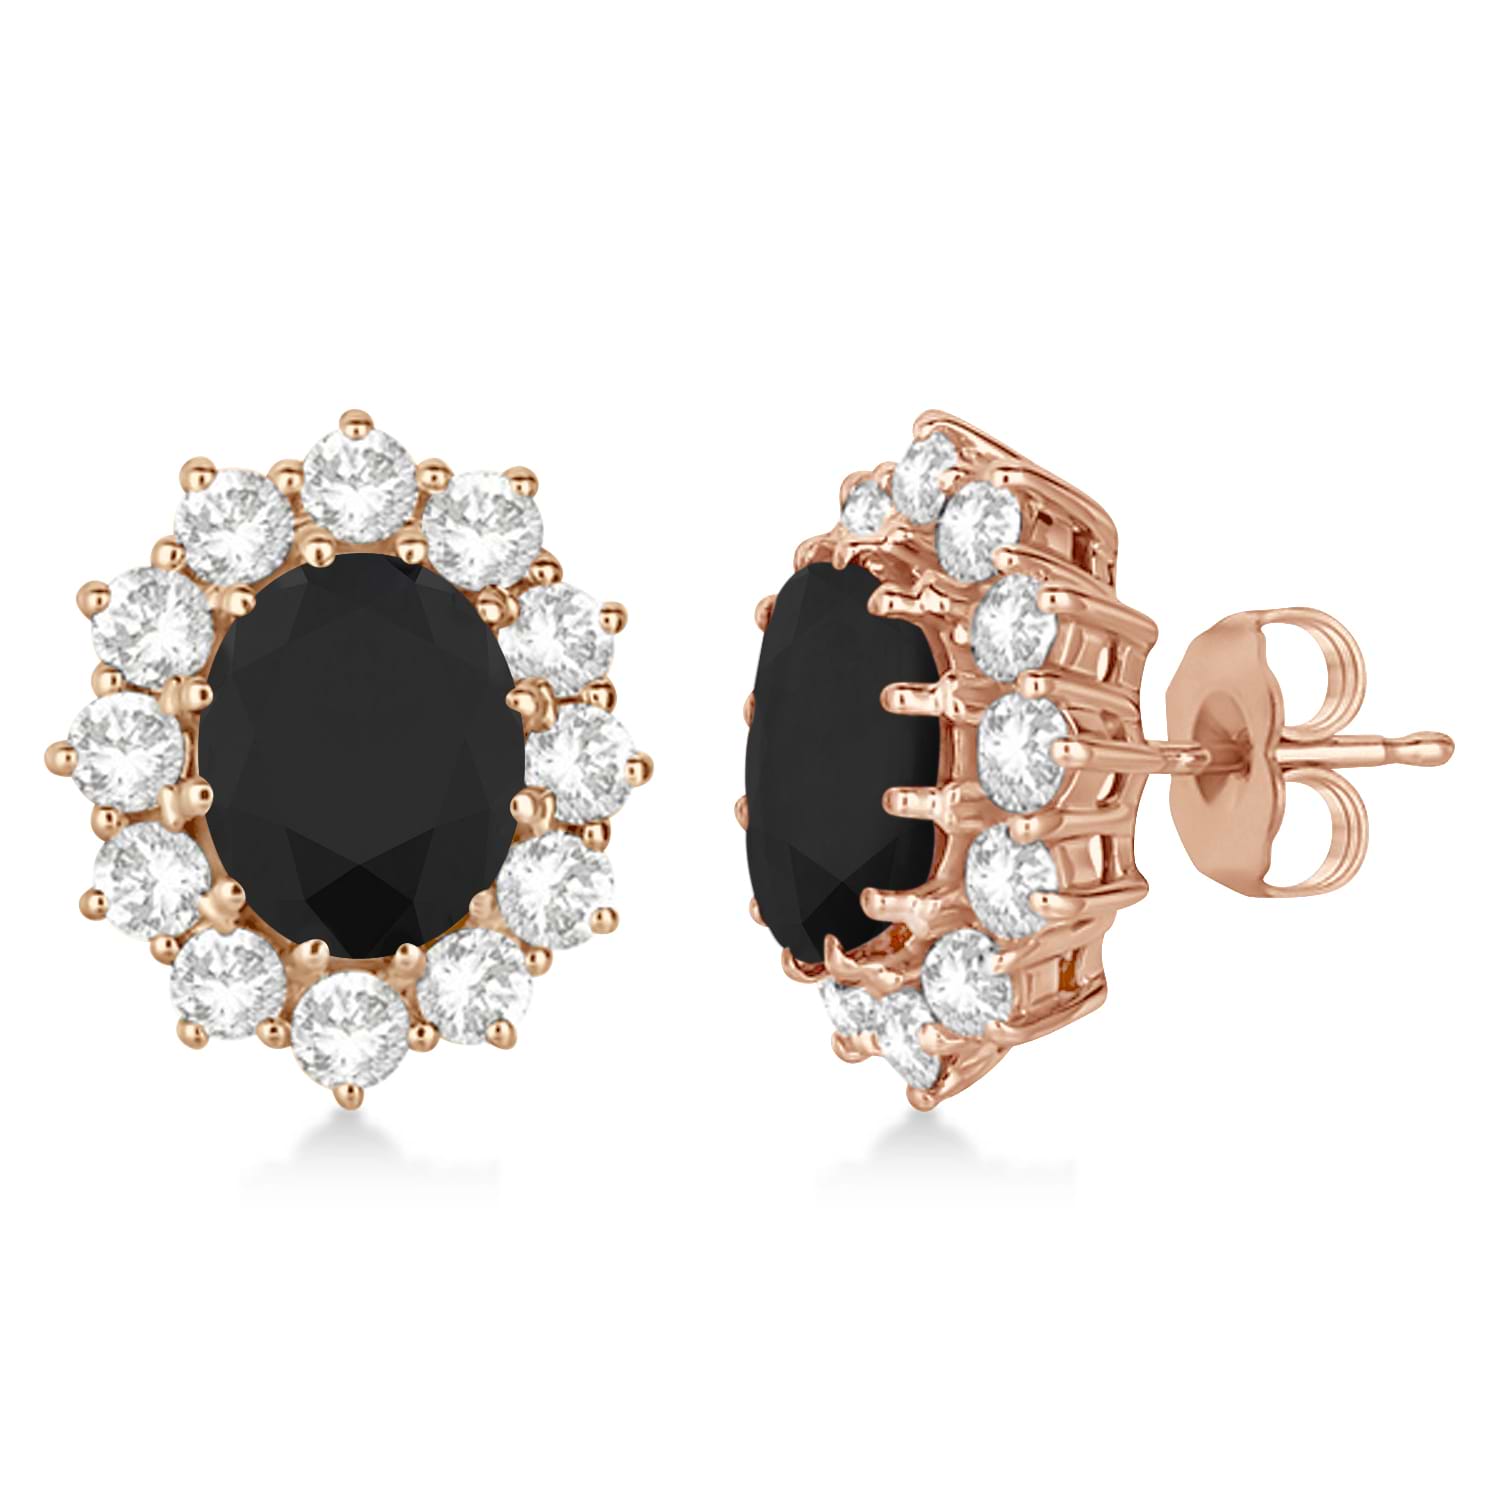 Oval Black and White Diamond Earrings 18k Rose Gold (5.55ctw)